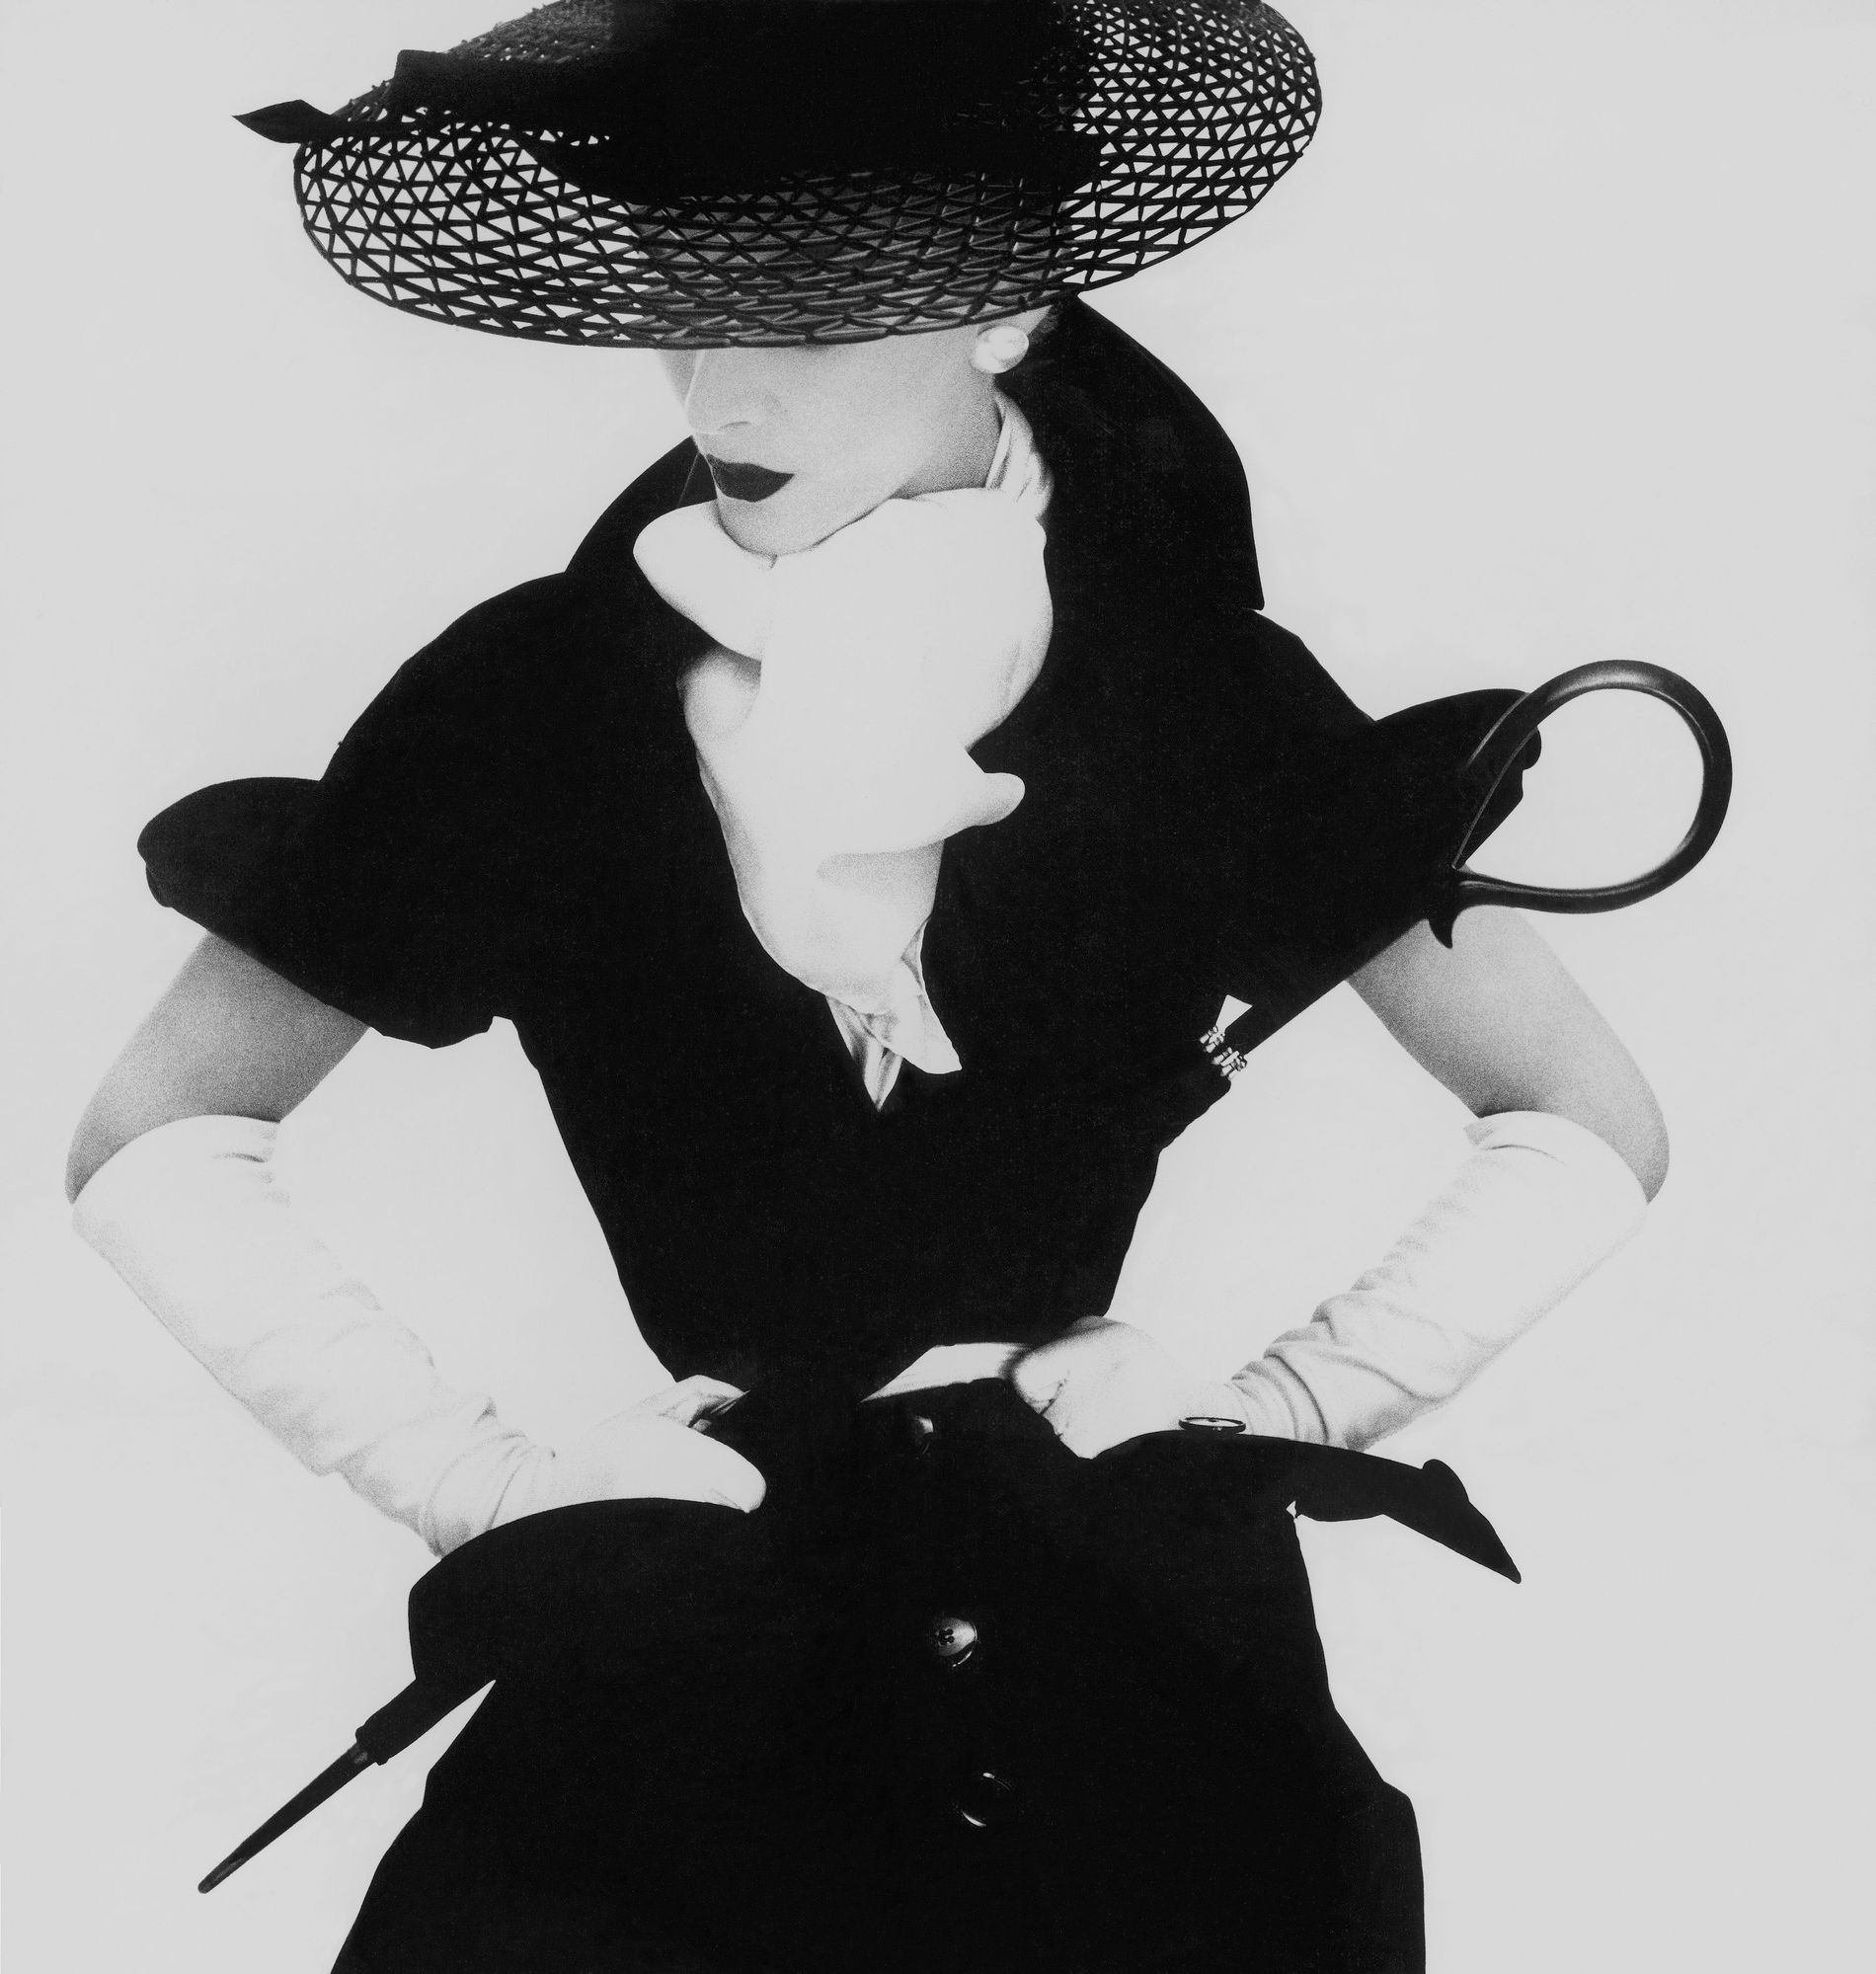 Model Lisa Fonssagrives-Penn wearing a black dress with a white scarf, gloves, wide-brimmed hat, and belt, holding umbrella